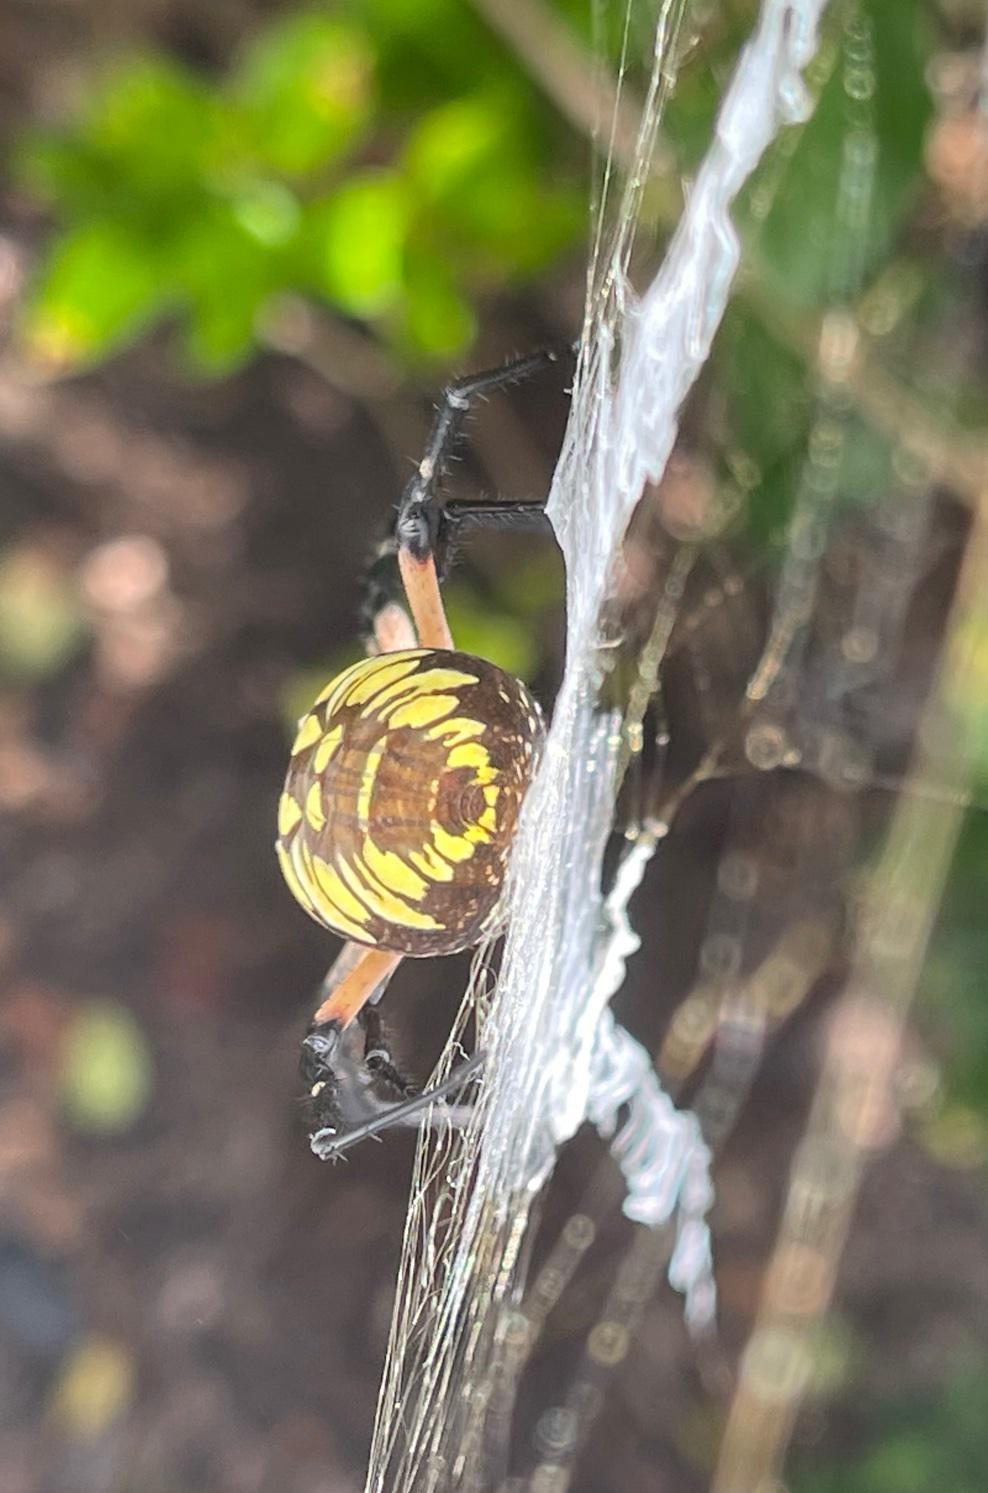 Yellow Writing Spider